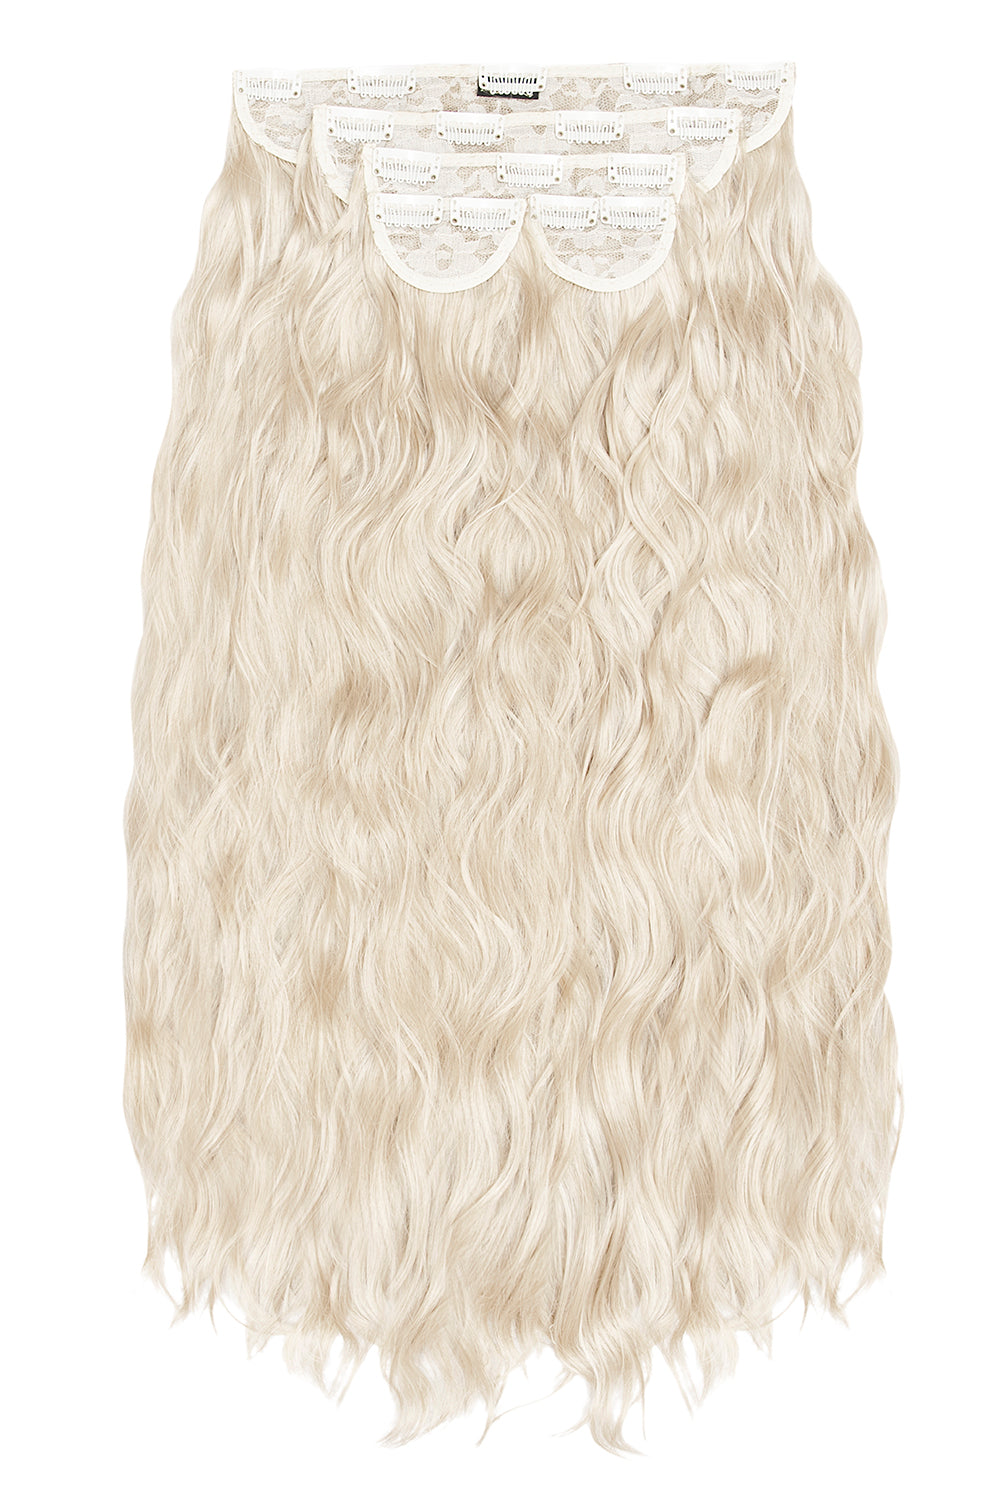 Super Thick 26" 5 Piece Waist Length Wave Clip In Hair Extensions - LullaBellz  - Bleach Blonde